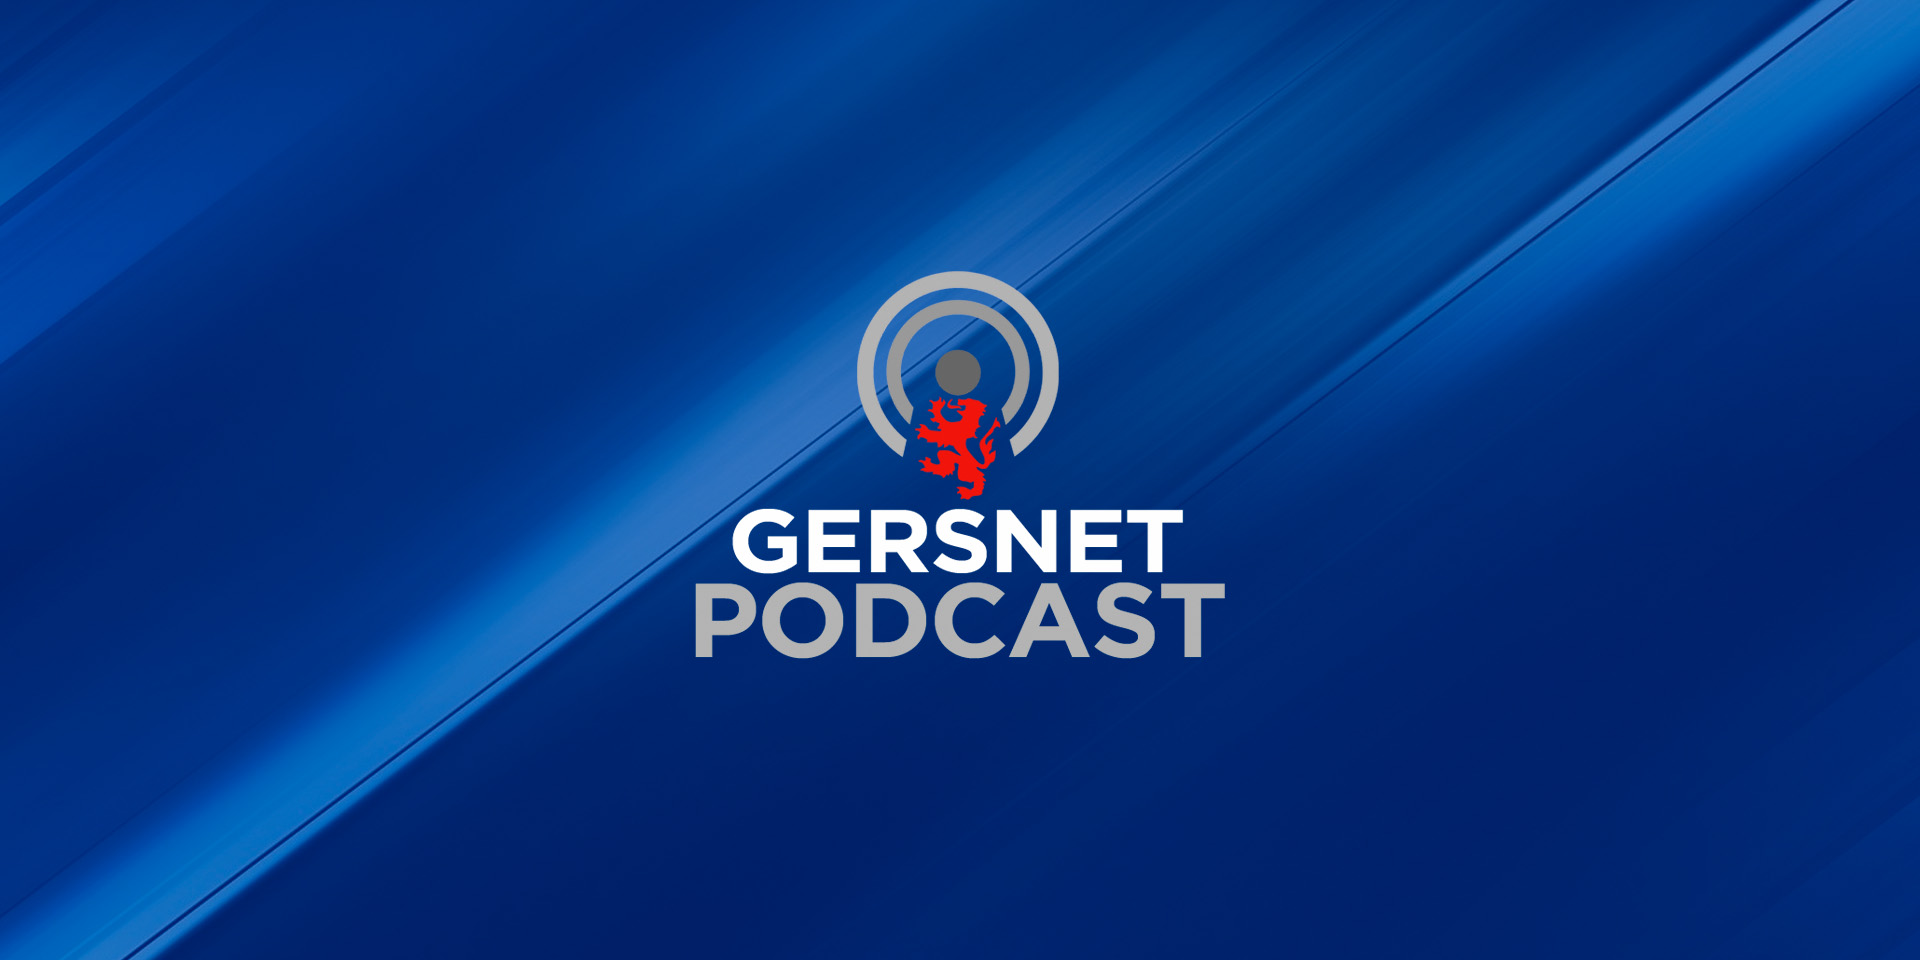 Gersnet Podcast 283 - International Break Sit Rep